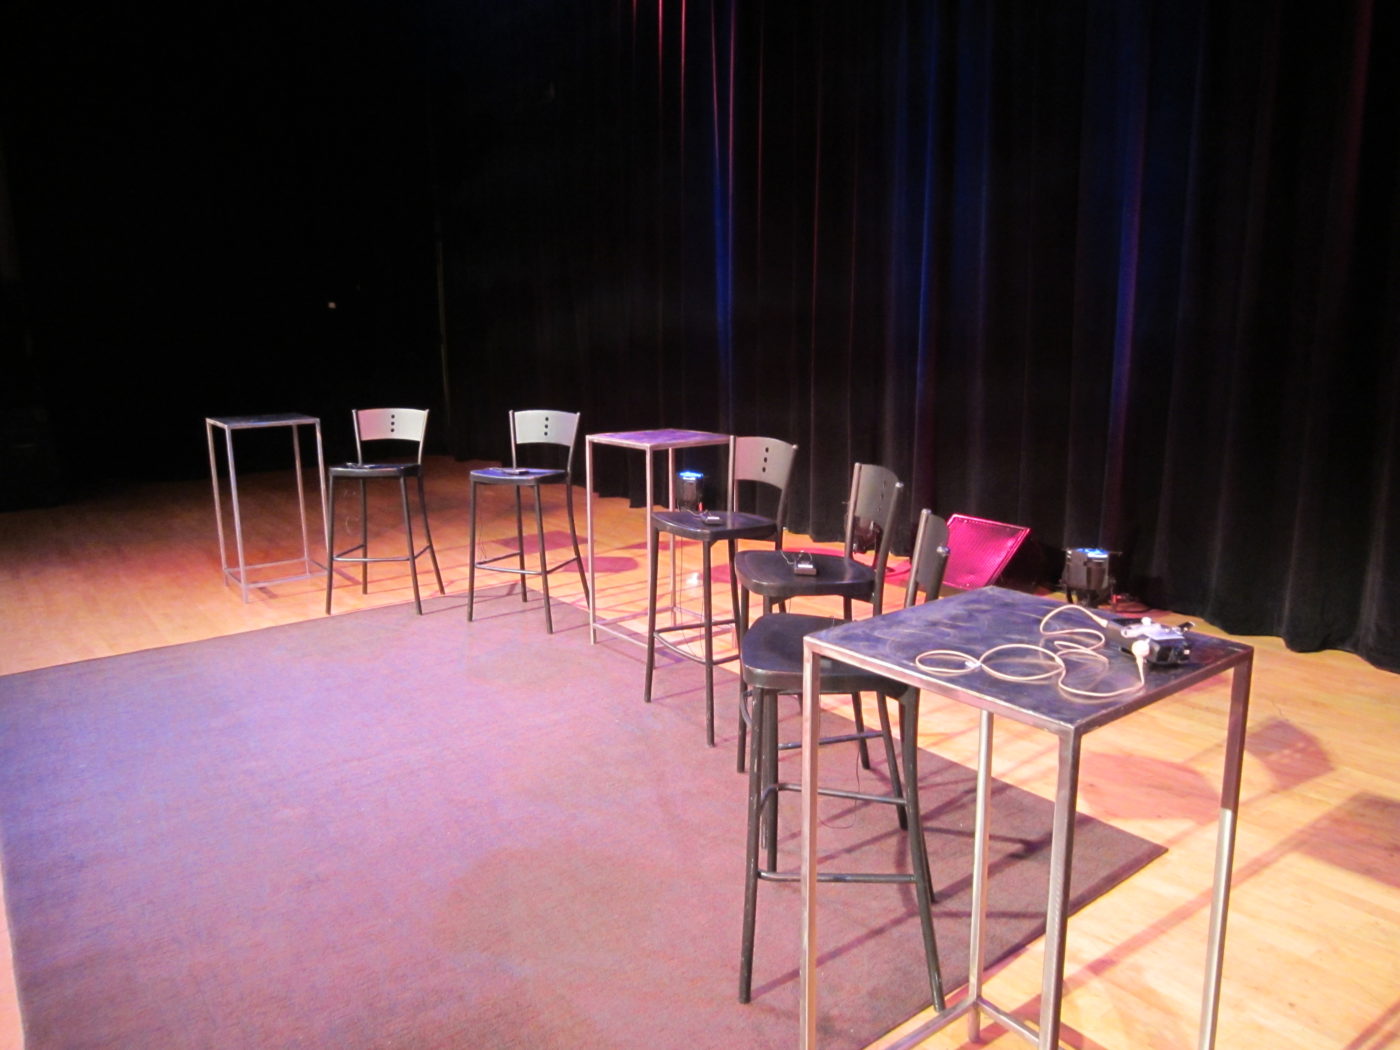 Jeffrey Simons' photo of the empty stage before StarTalk Live.